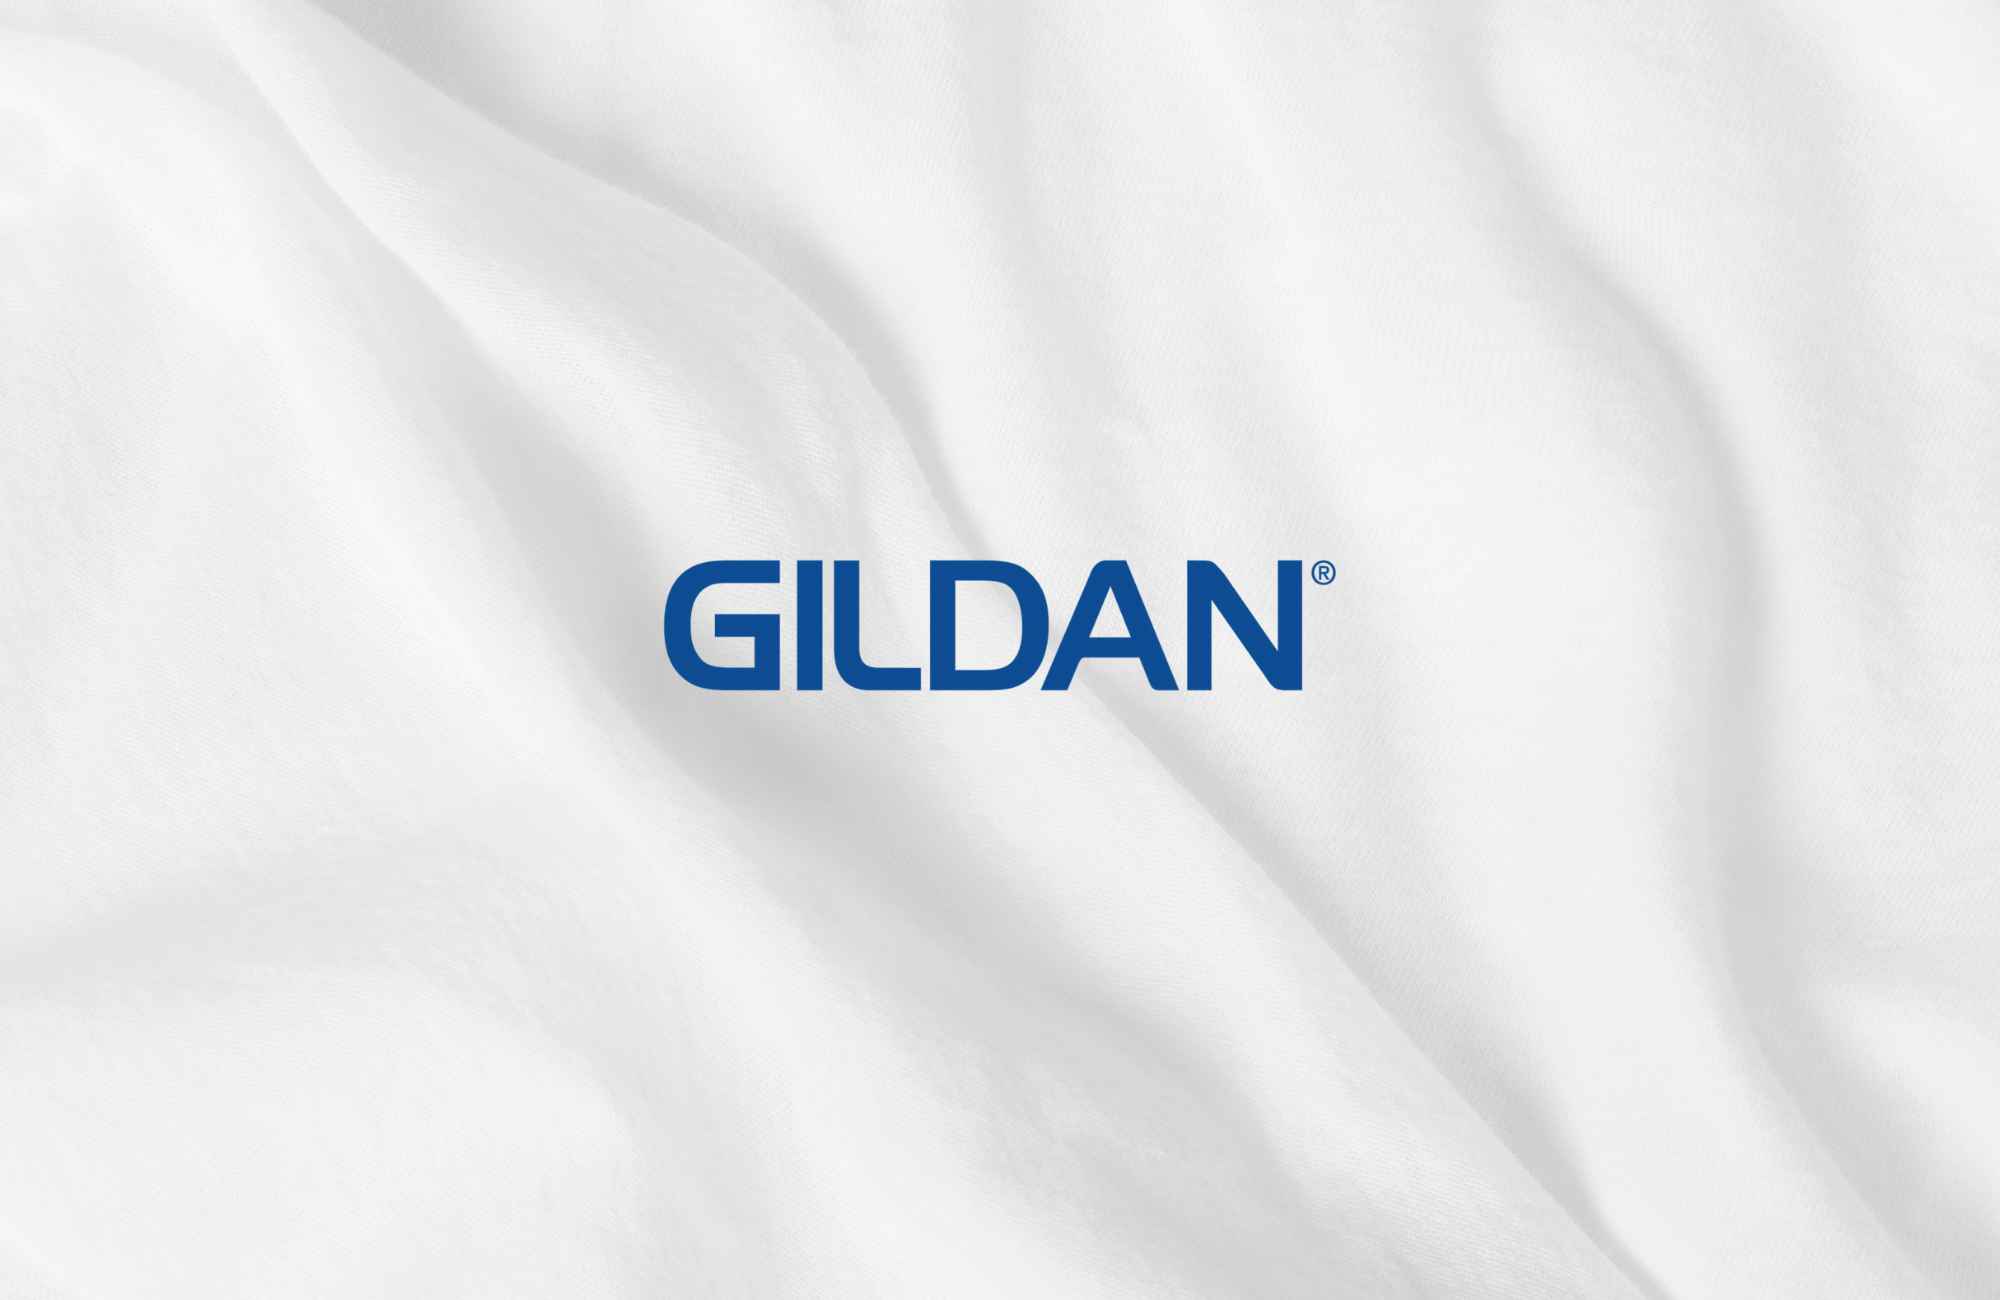 Gildan's Full Collection of Men's Underwear Now on ! - Press